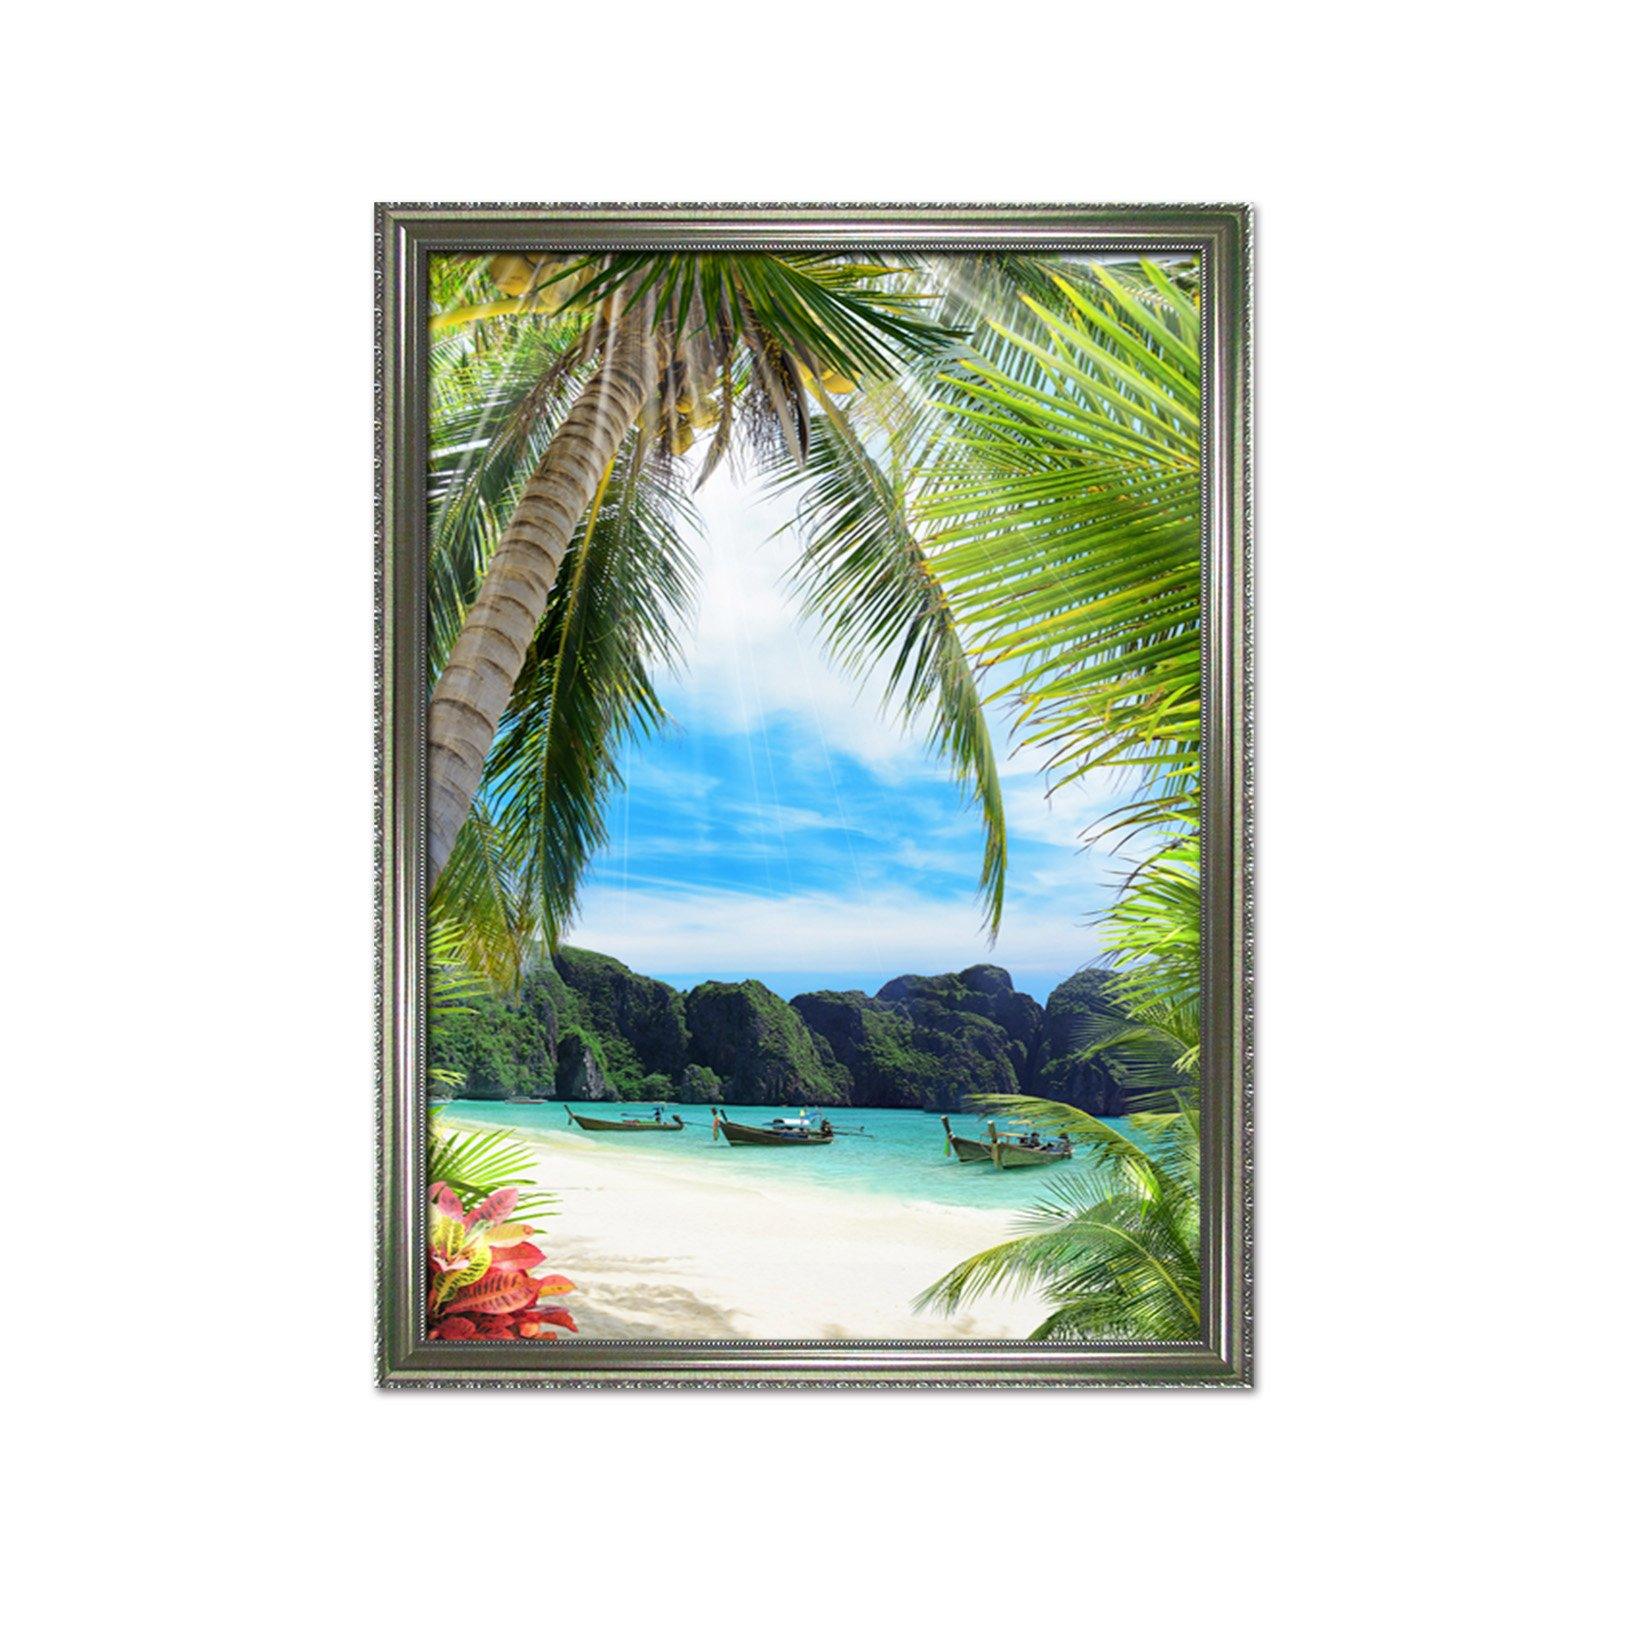 3D Coconut Boat 047 Fake Framed Print Painting Wallpaper AJ Creativity Home 